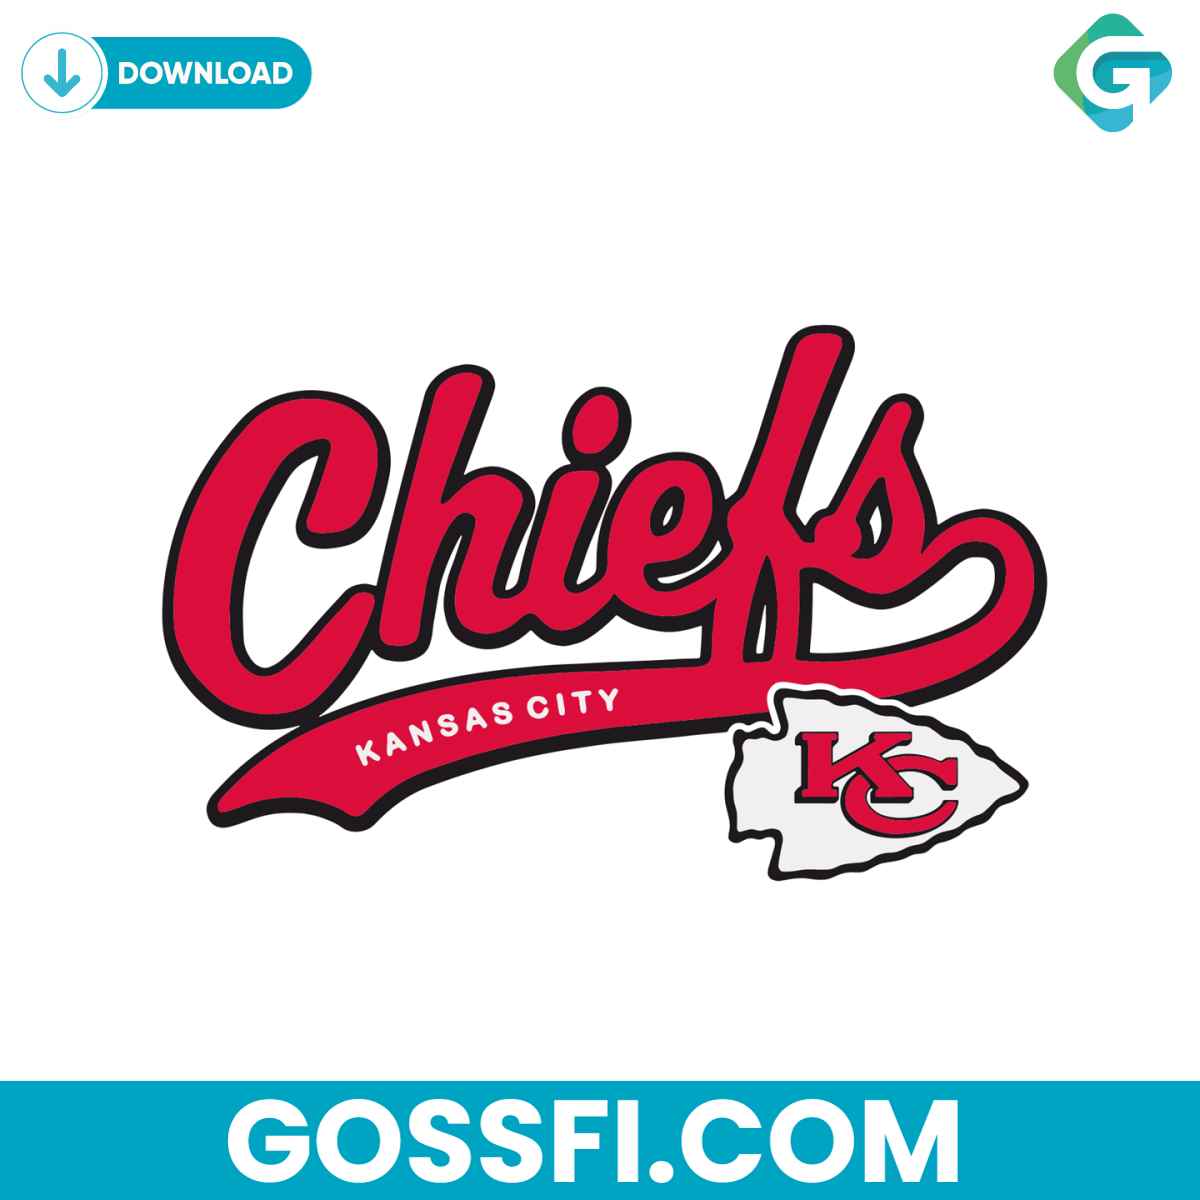 chiefs-kansas-city-logo-football-team-svg